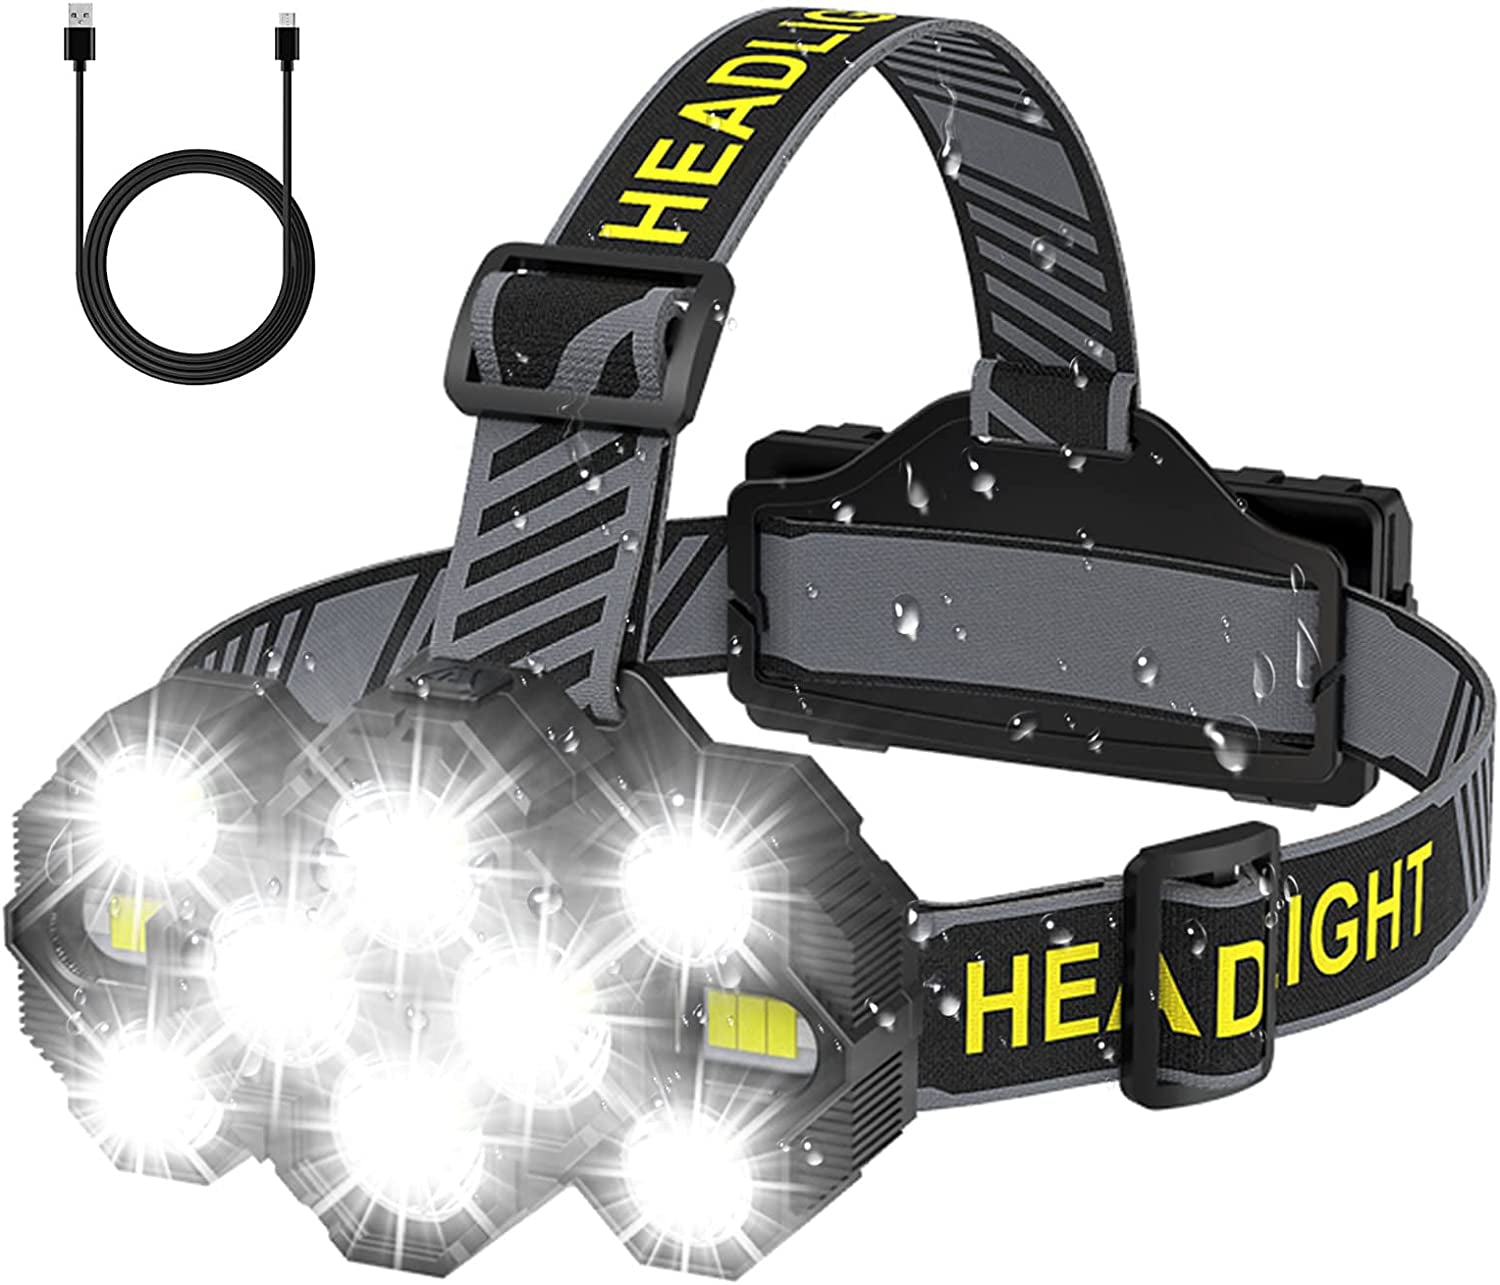 utdoor Body Motion Sensor LED Headlamp Flashlight For Running